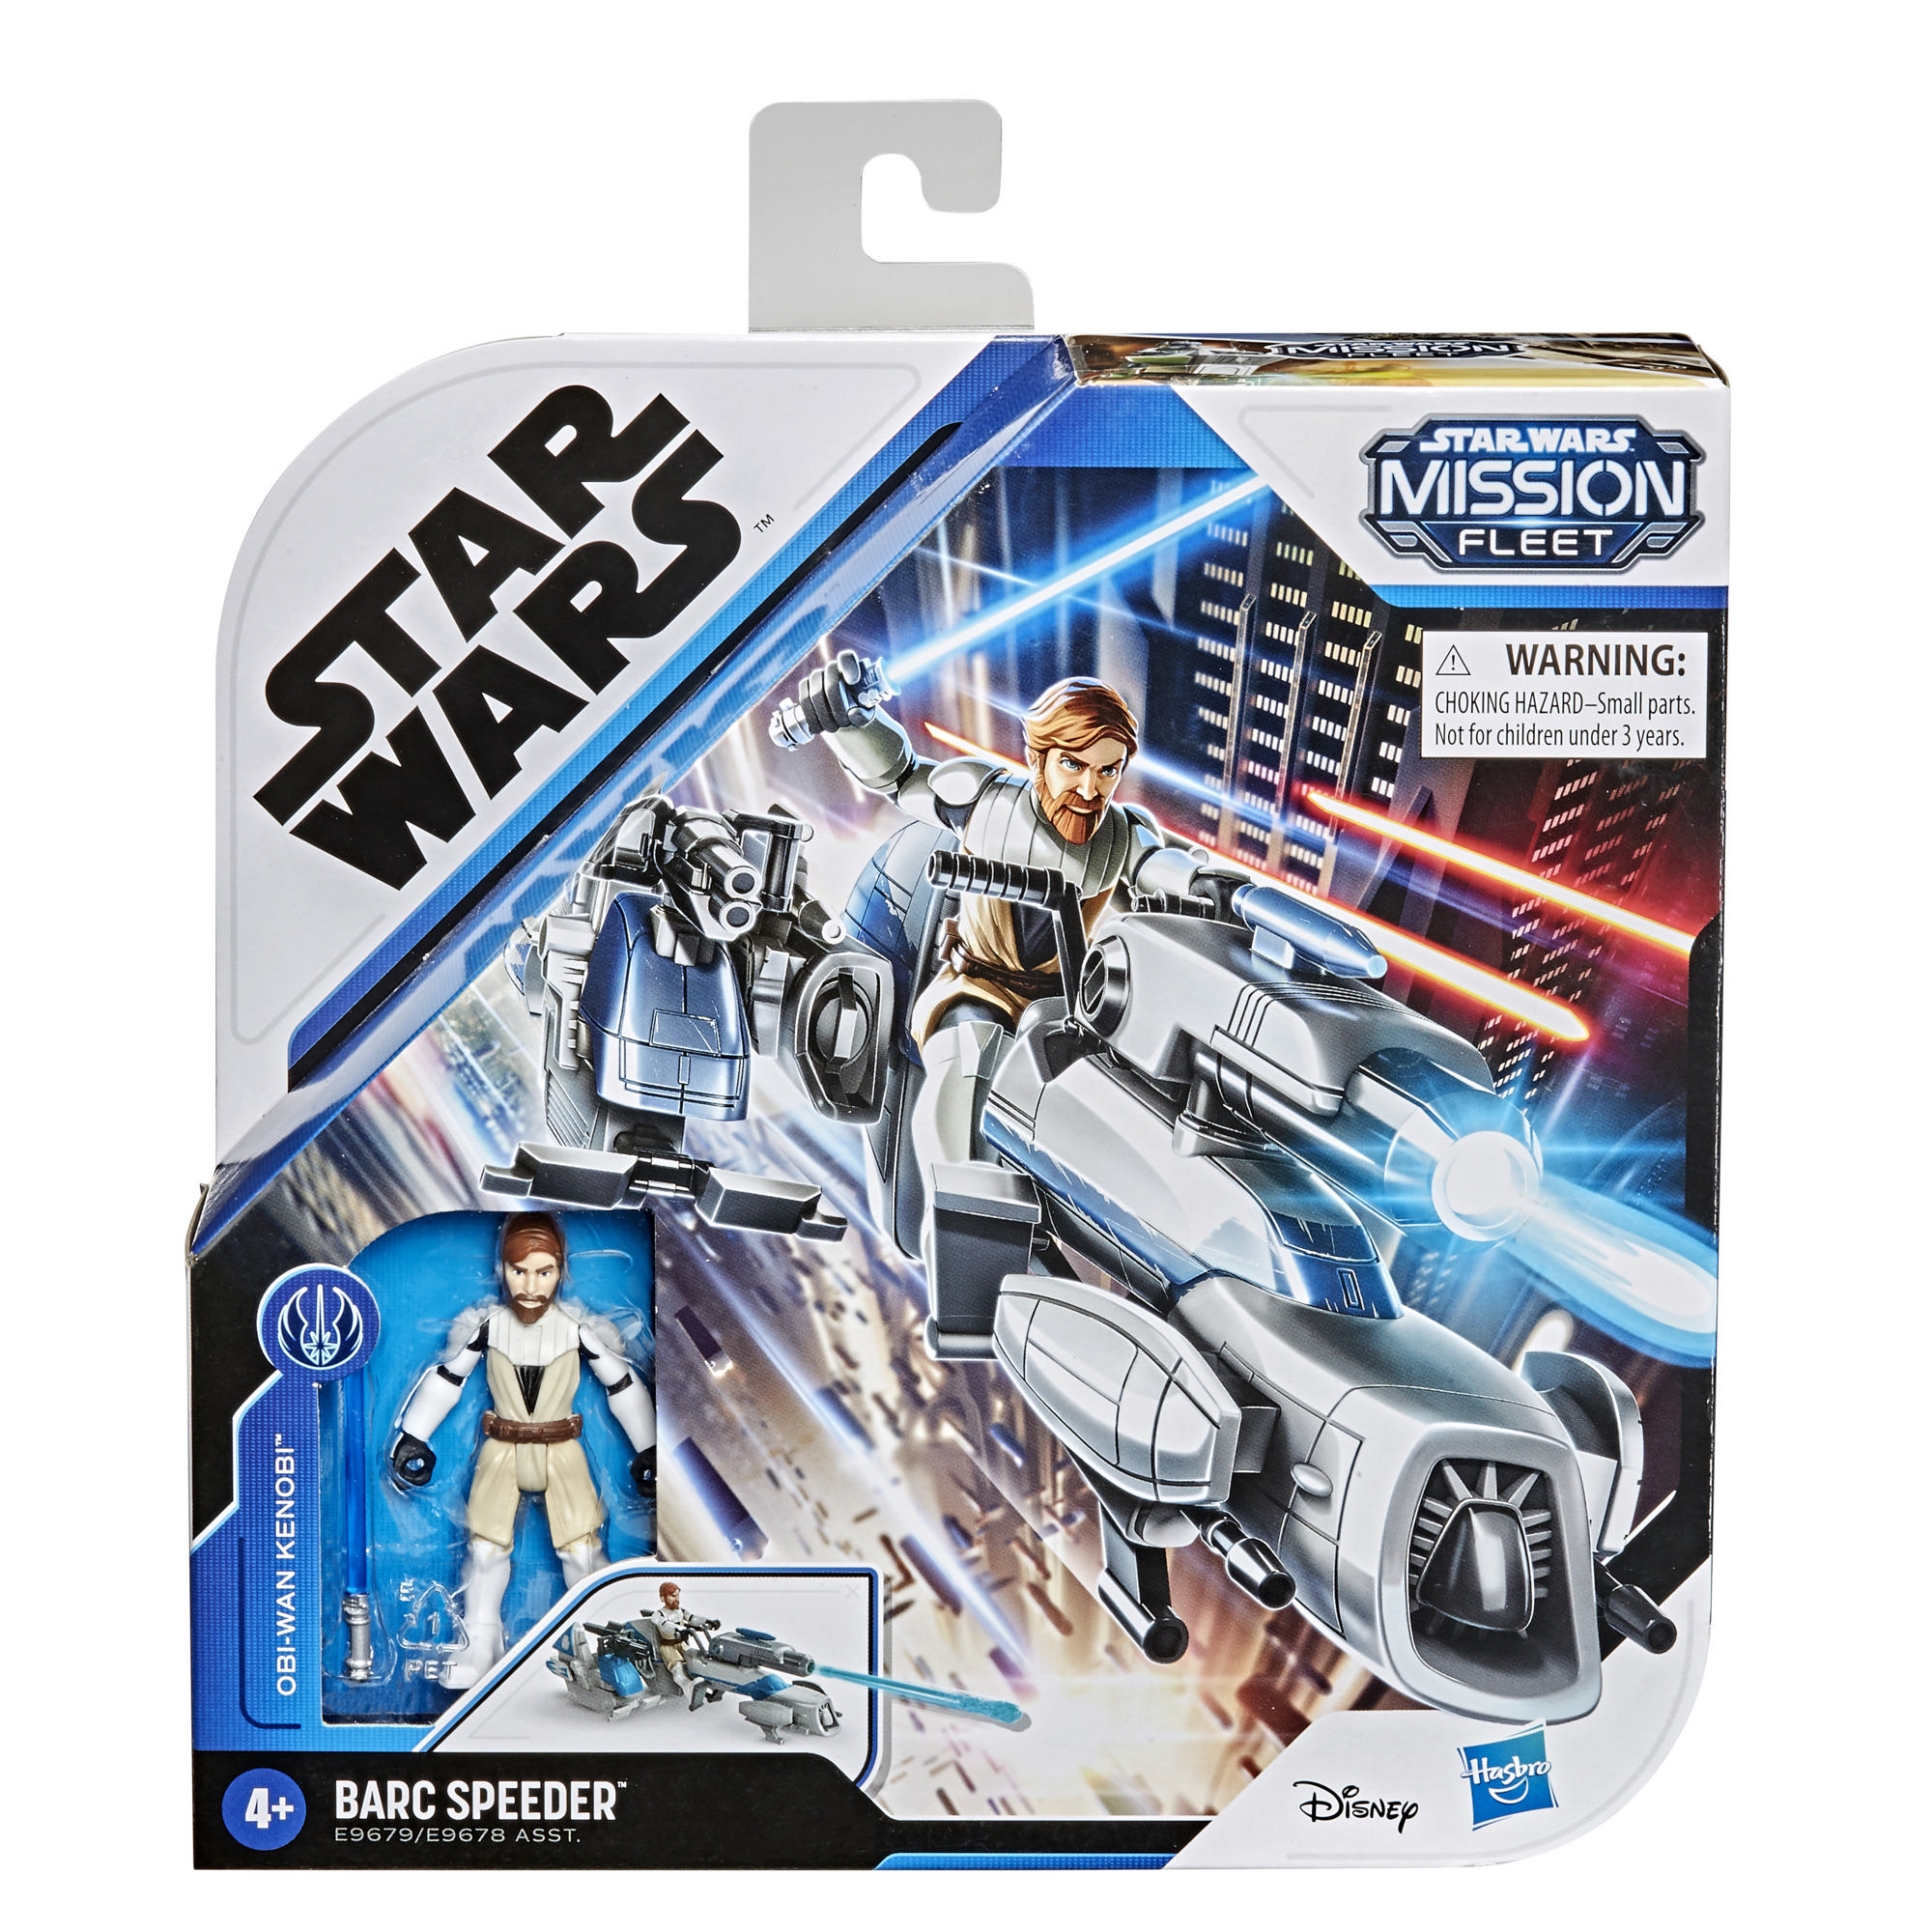 Star Wars Mission Fleet Expedition Class Obi-Wan Kenobi Jedi Speeder Chase 2.5-Inch-Scale Figure and Vehicle